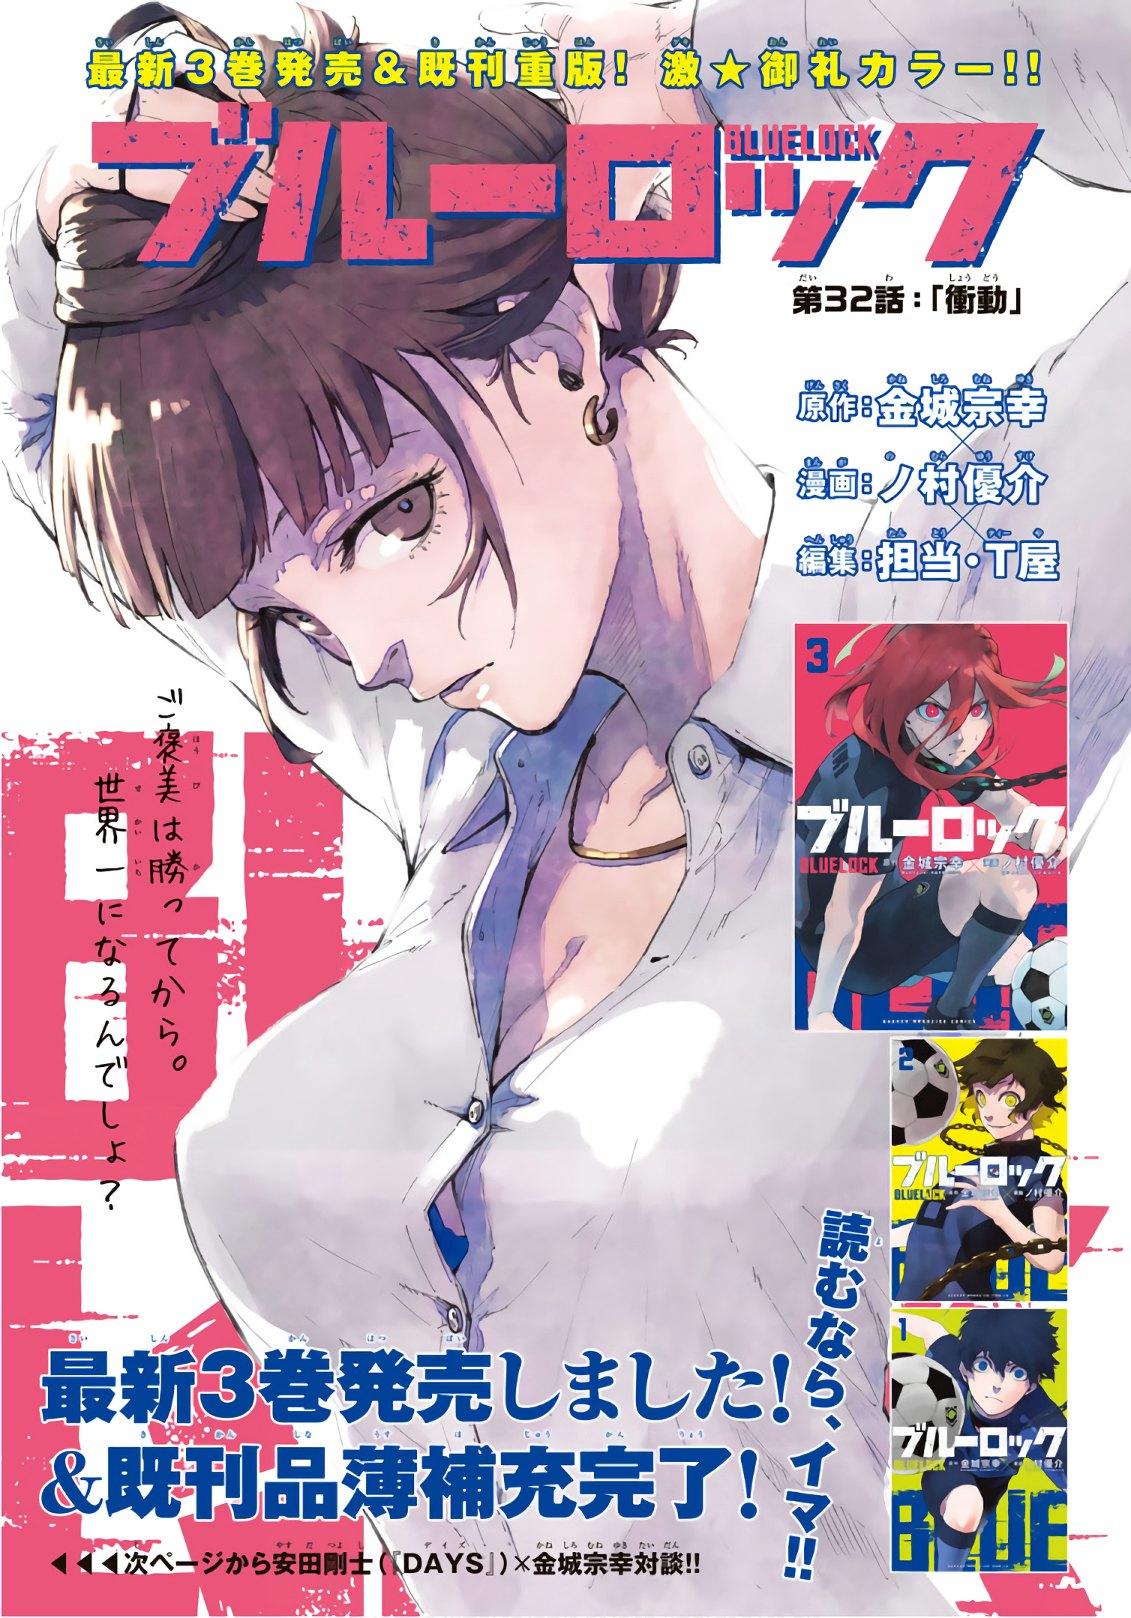 Blue Lock, Chapter 57 - Blue Lock Manga Online